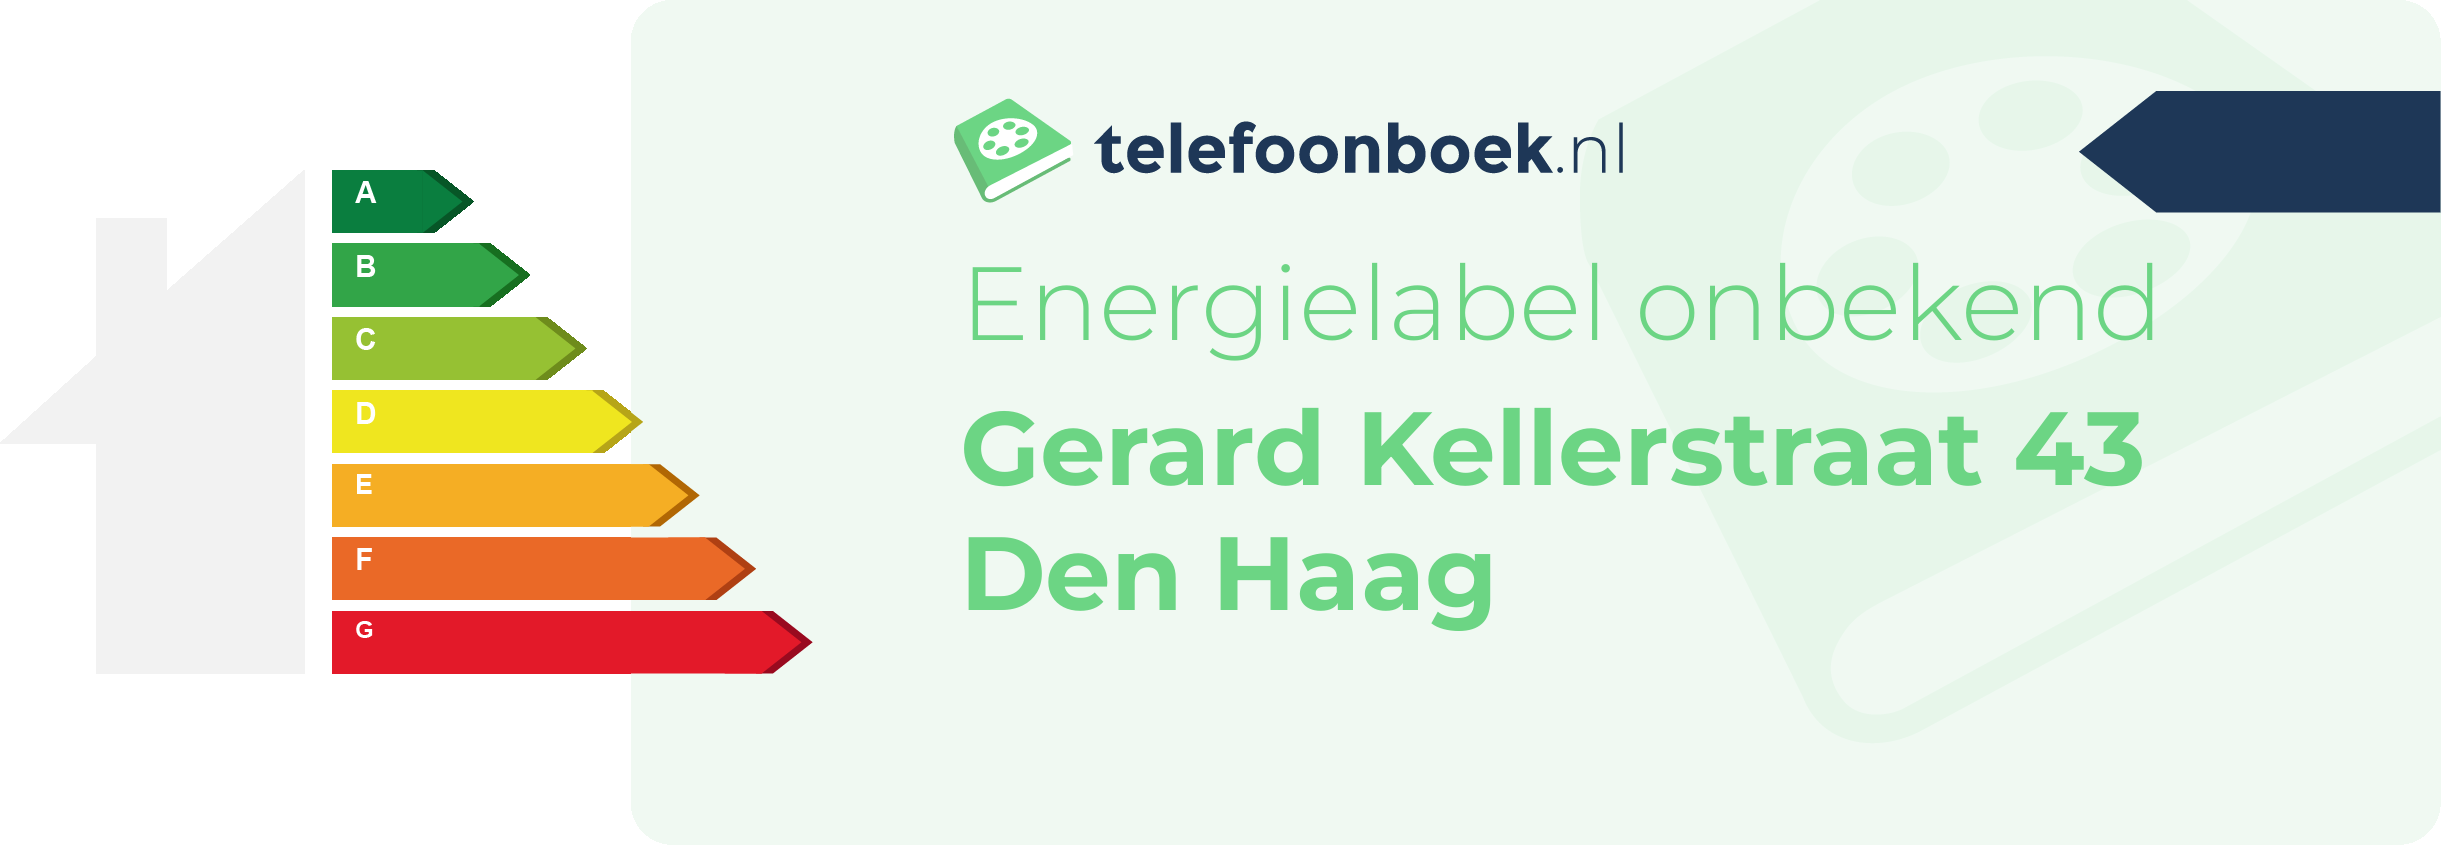 Energielabel Gerard Kellerstraat 43 Den Haag